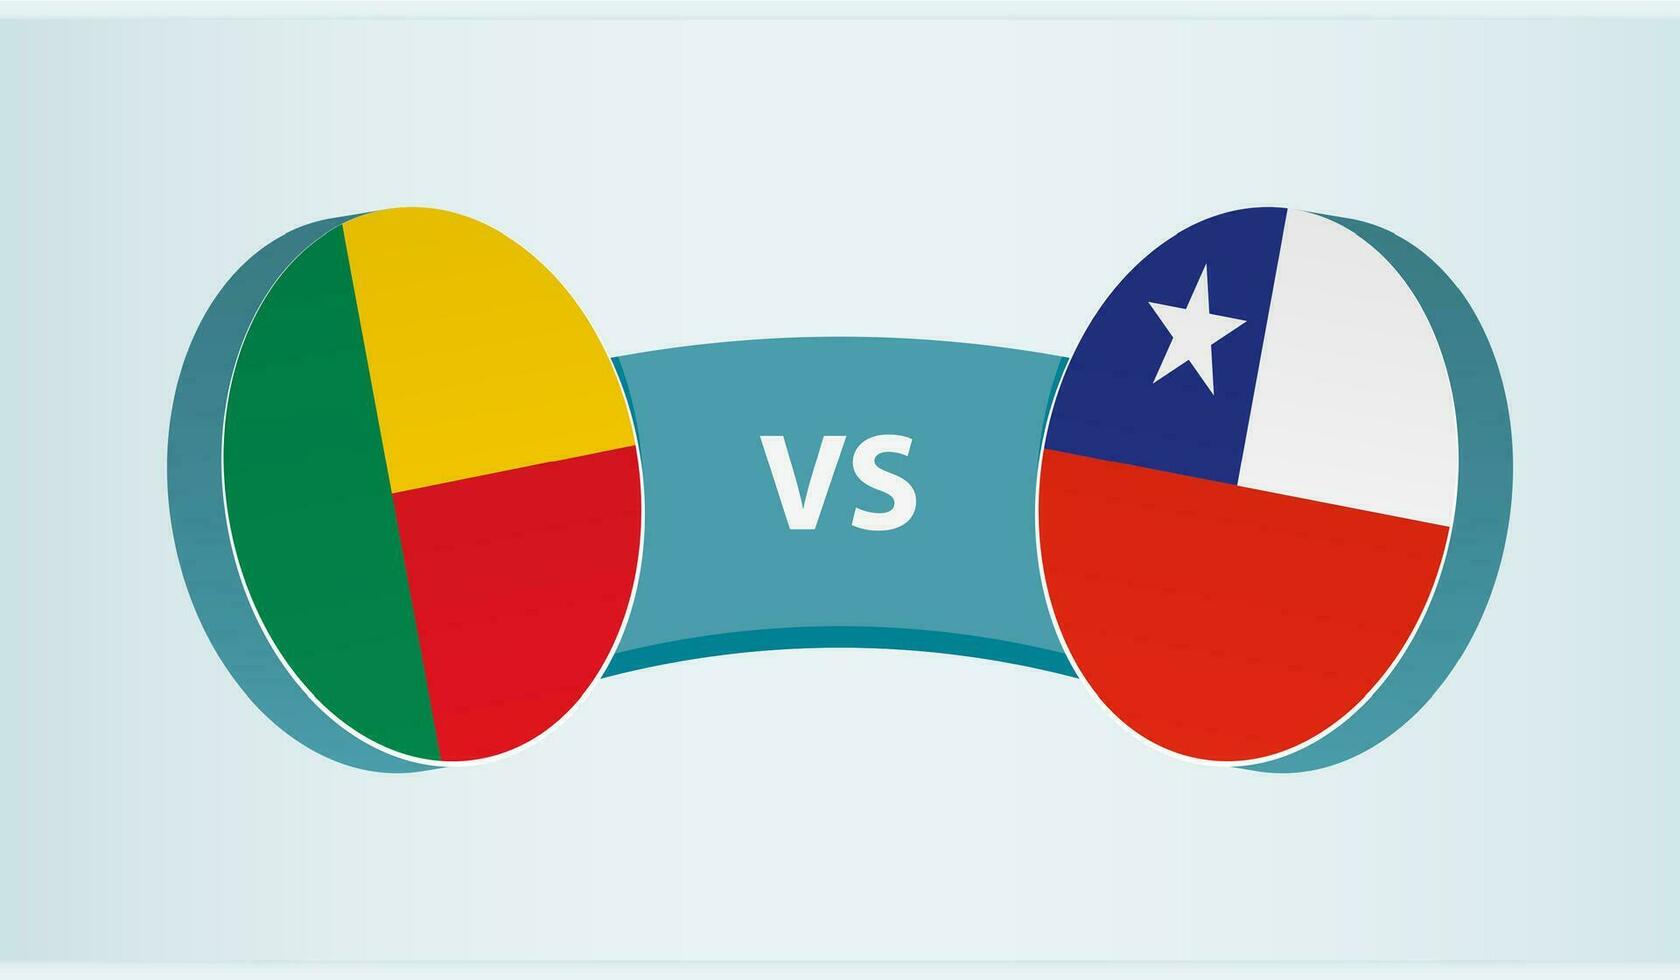 benin versus Chile, equipe Esportes concorrência conceito. vetor